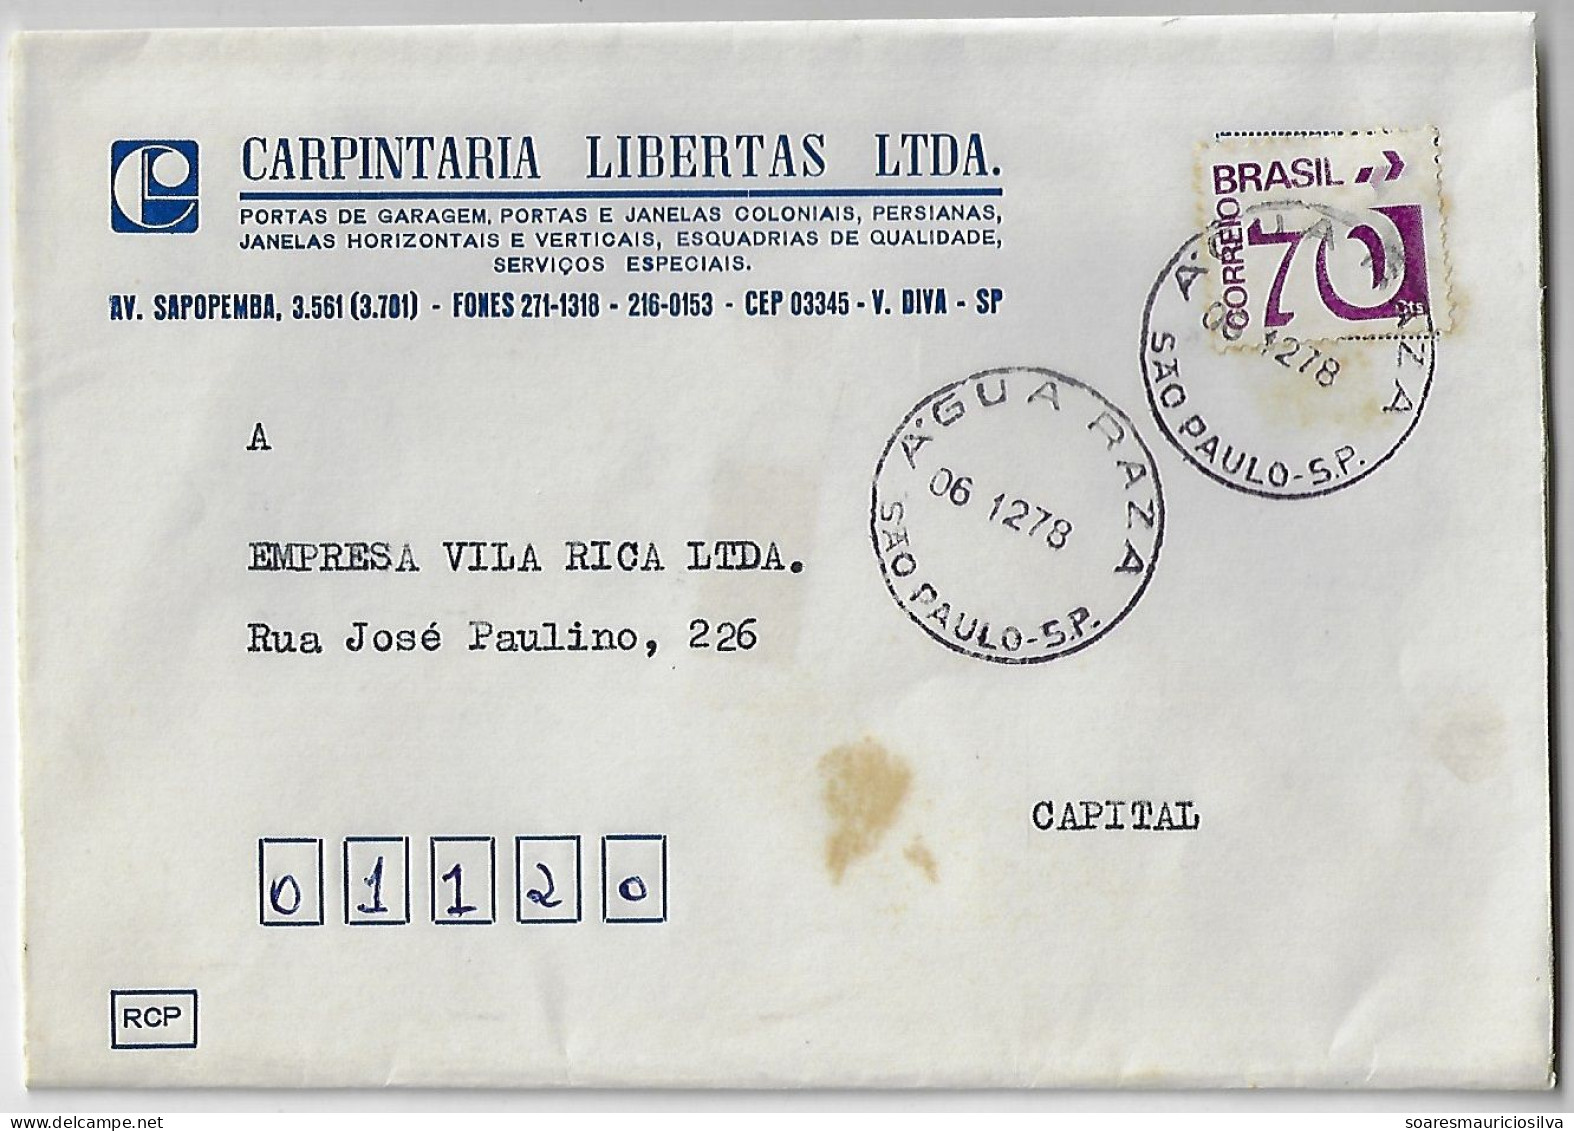 Brazil 1978 Carpentry Libertas Ltd Cover Shipped In São Paulo Agency Água Raza (shallow Water) Definitive Stamp 70 Cents - Cartas & Documentos